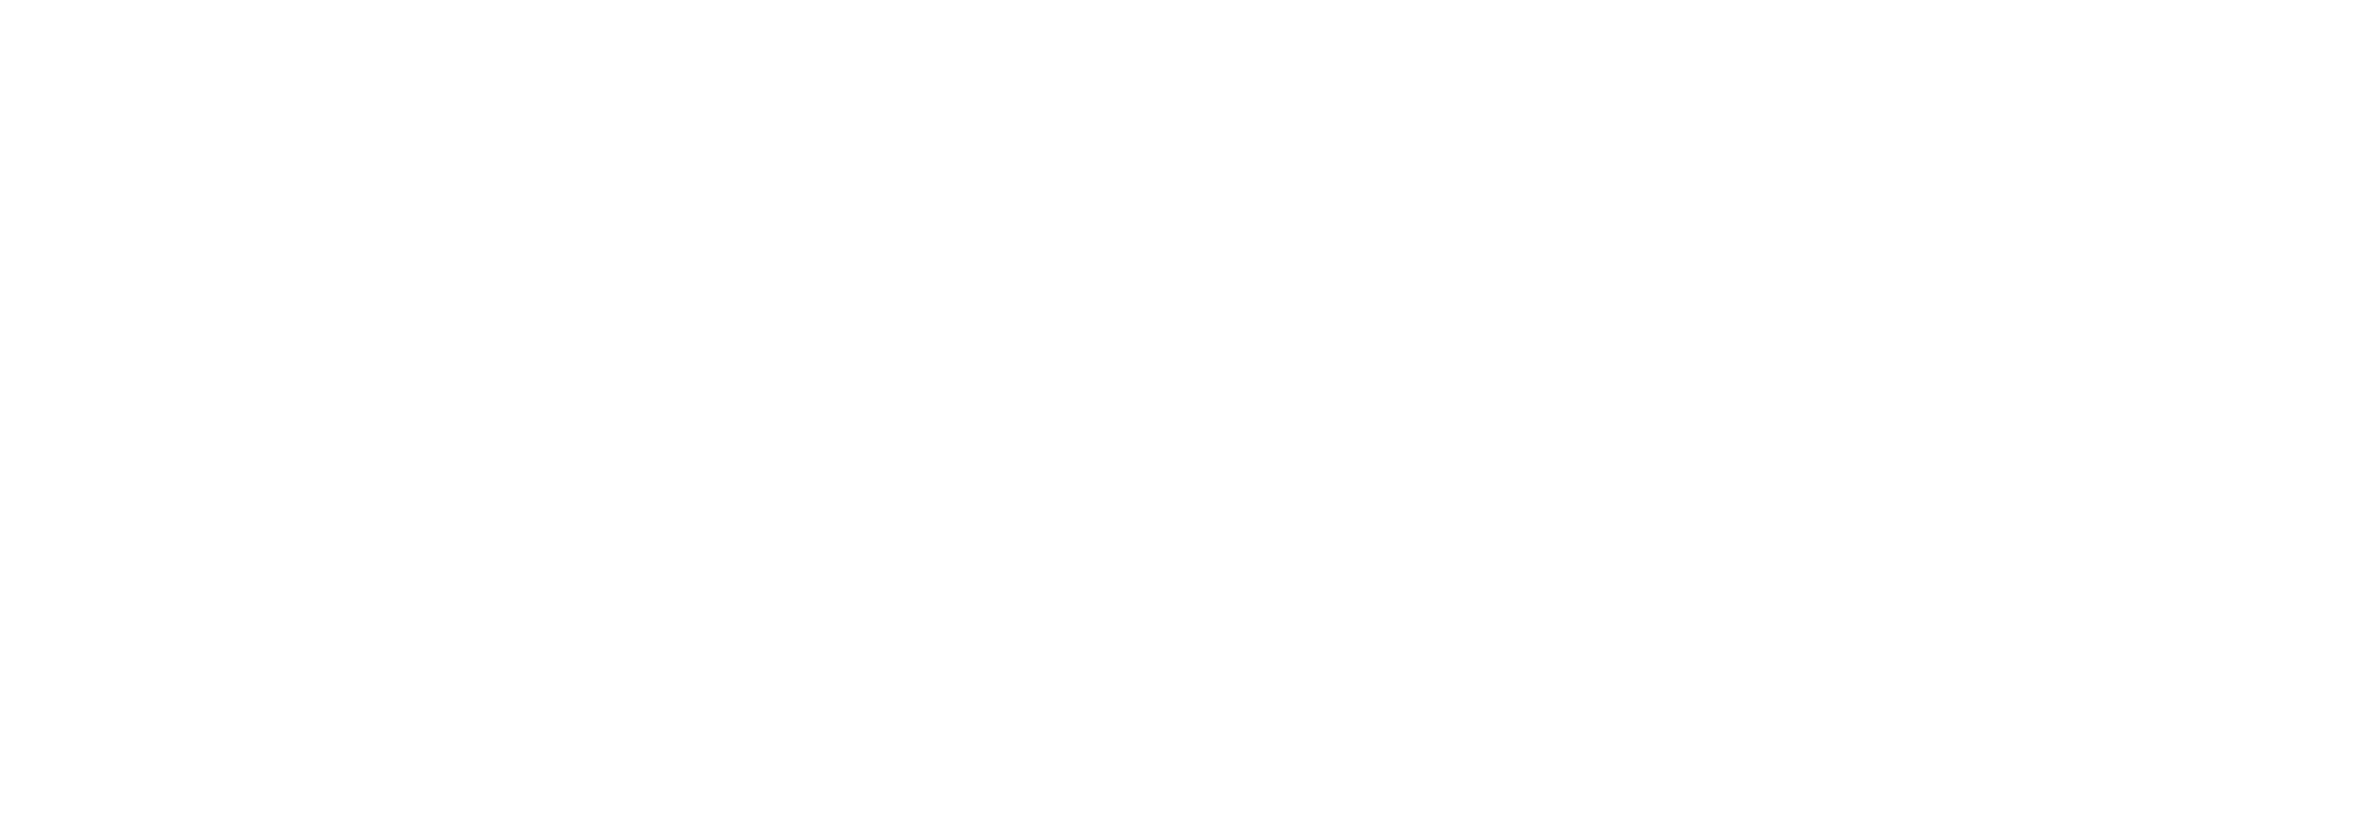 HCA Nurses Now Primary Logo White RGB